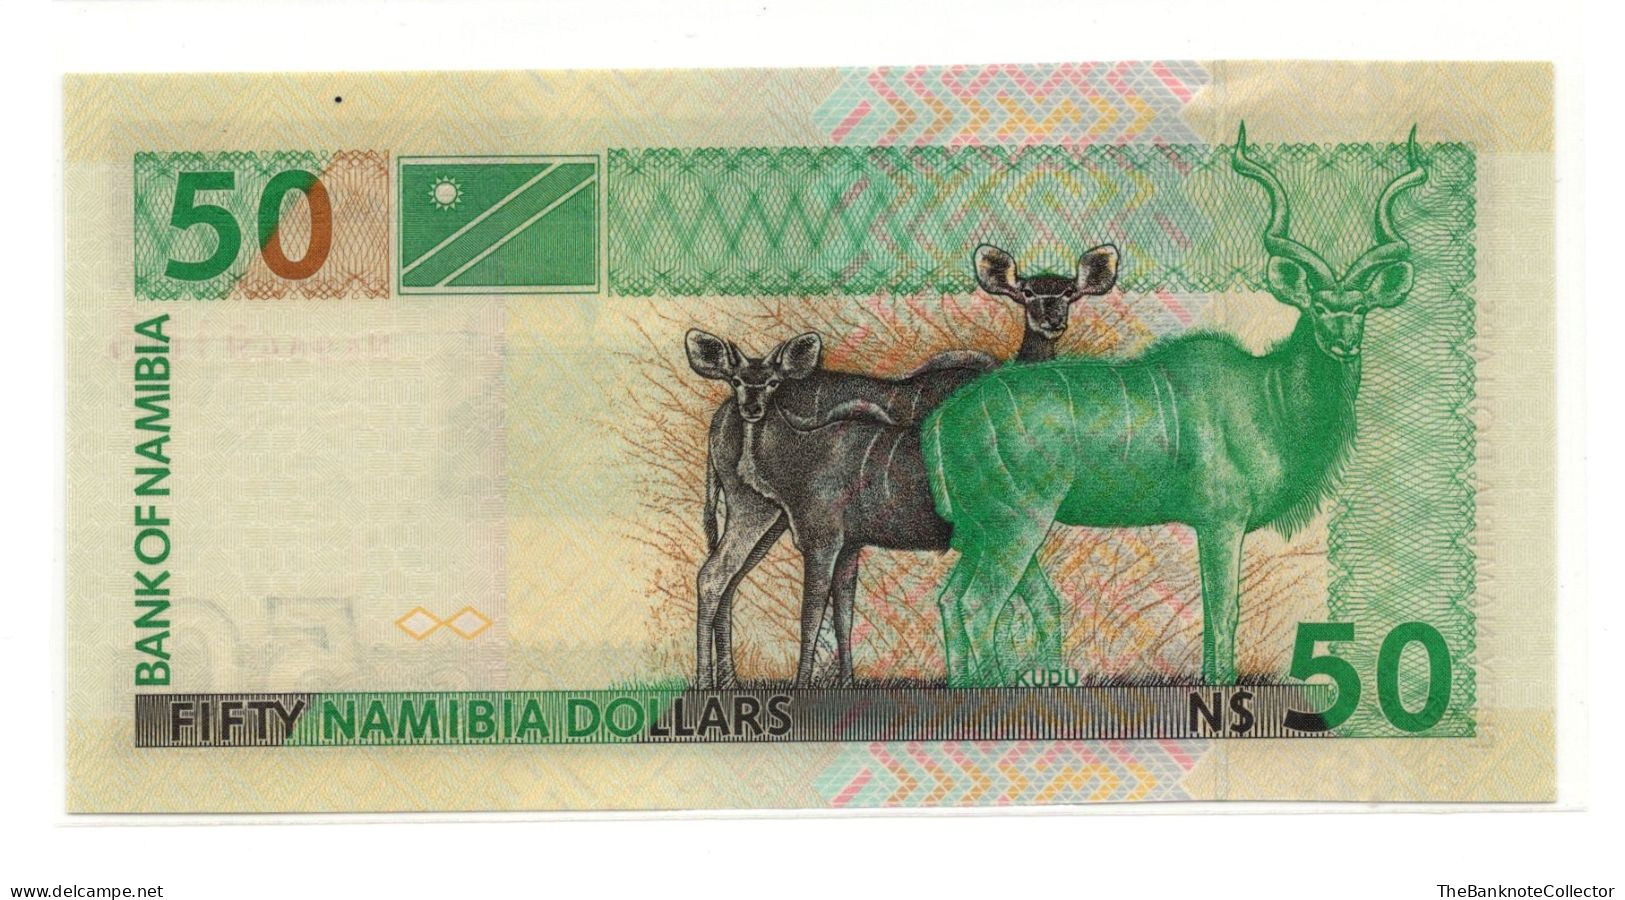 Namibia 50 Dollars ND 1996-2003 P-6 UNC - Namibia